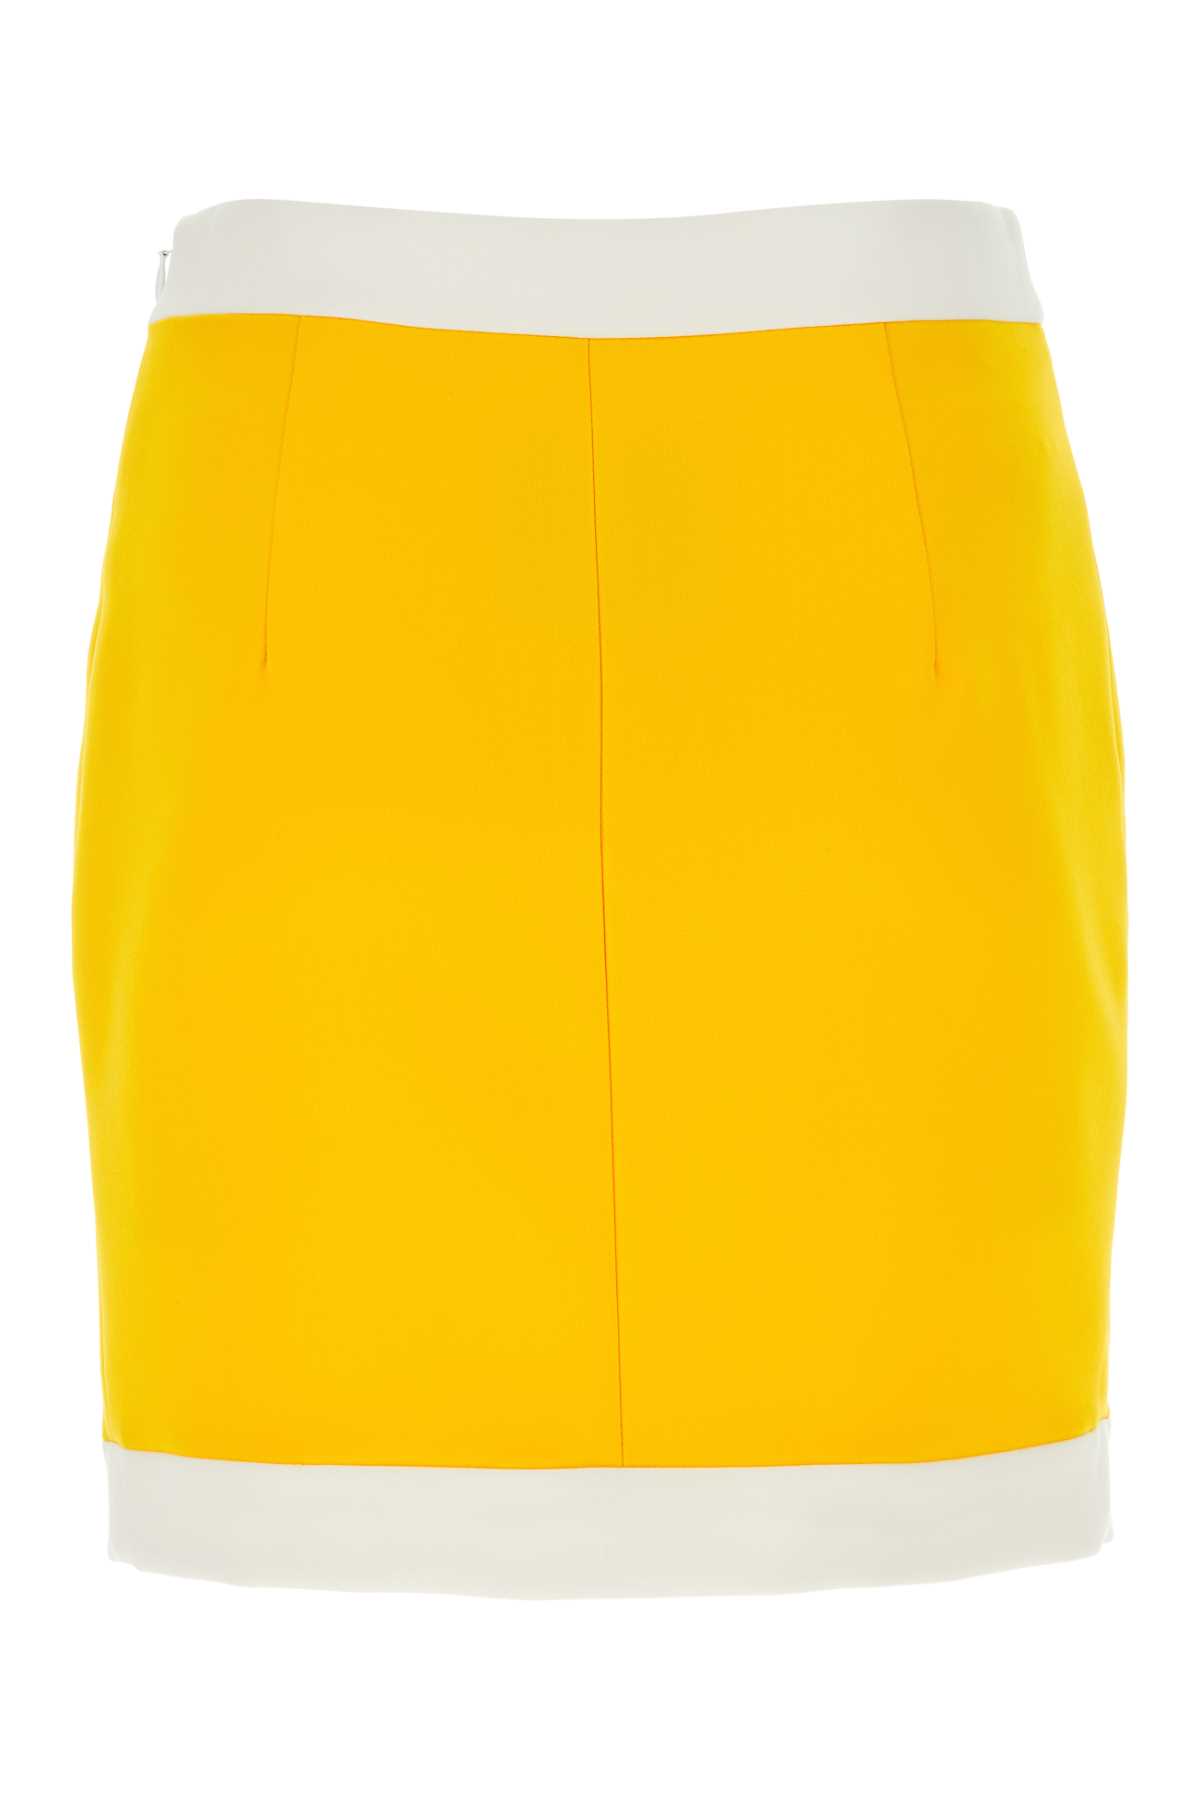 Moschino Yellow Stretch Jersey Mini Skirt In Fantasiagiallo